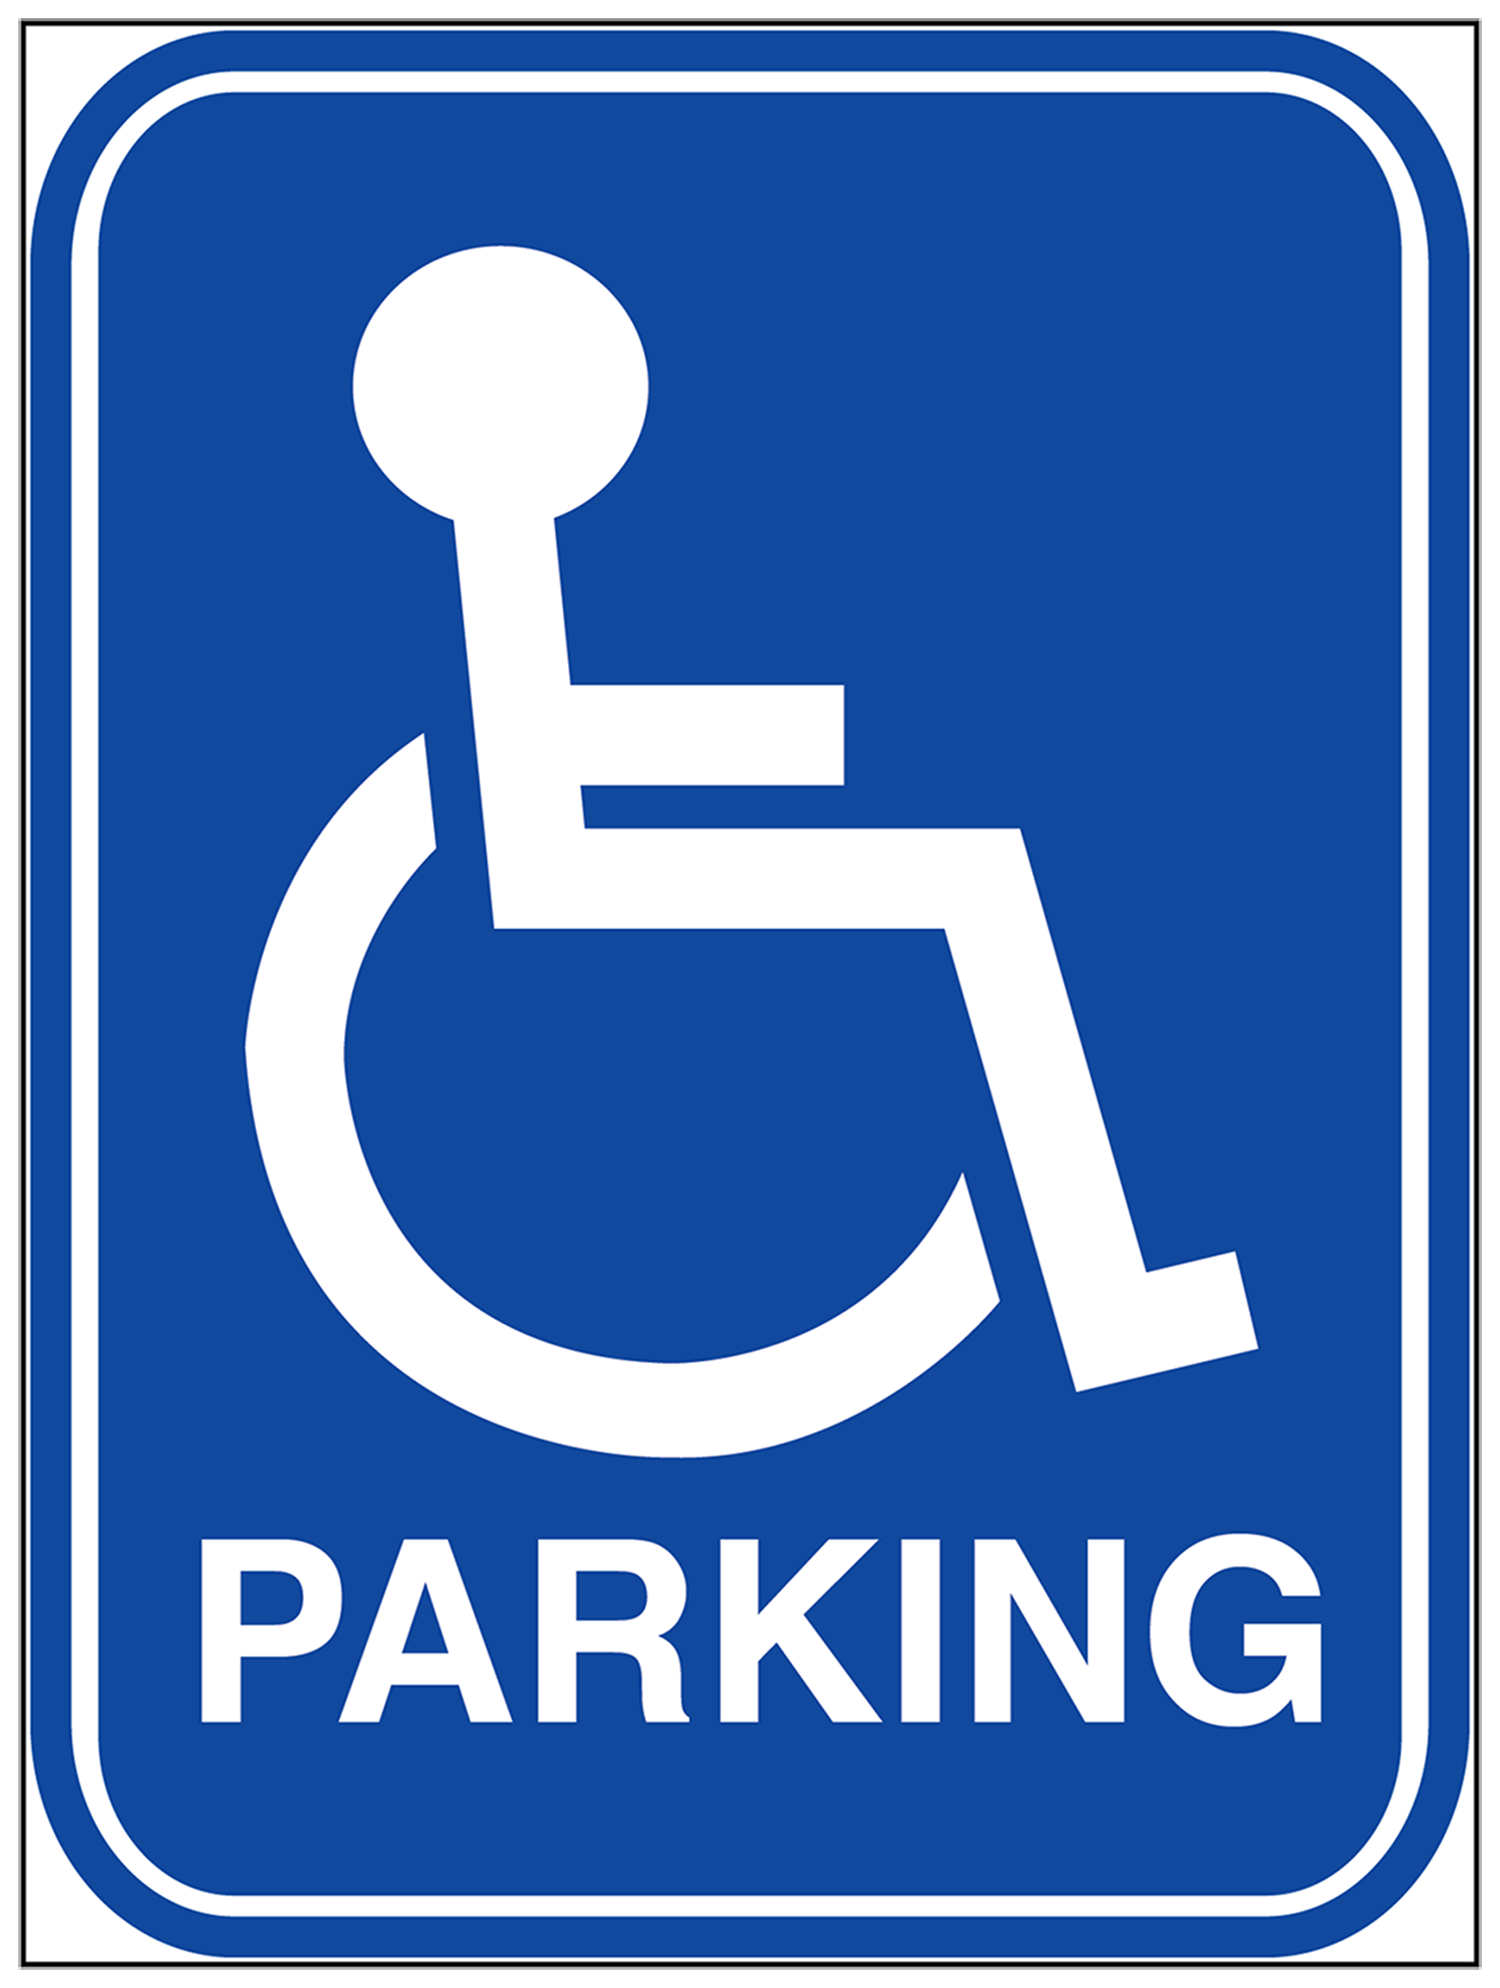 Handicap Parking Sign Printable